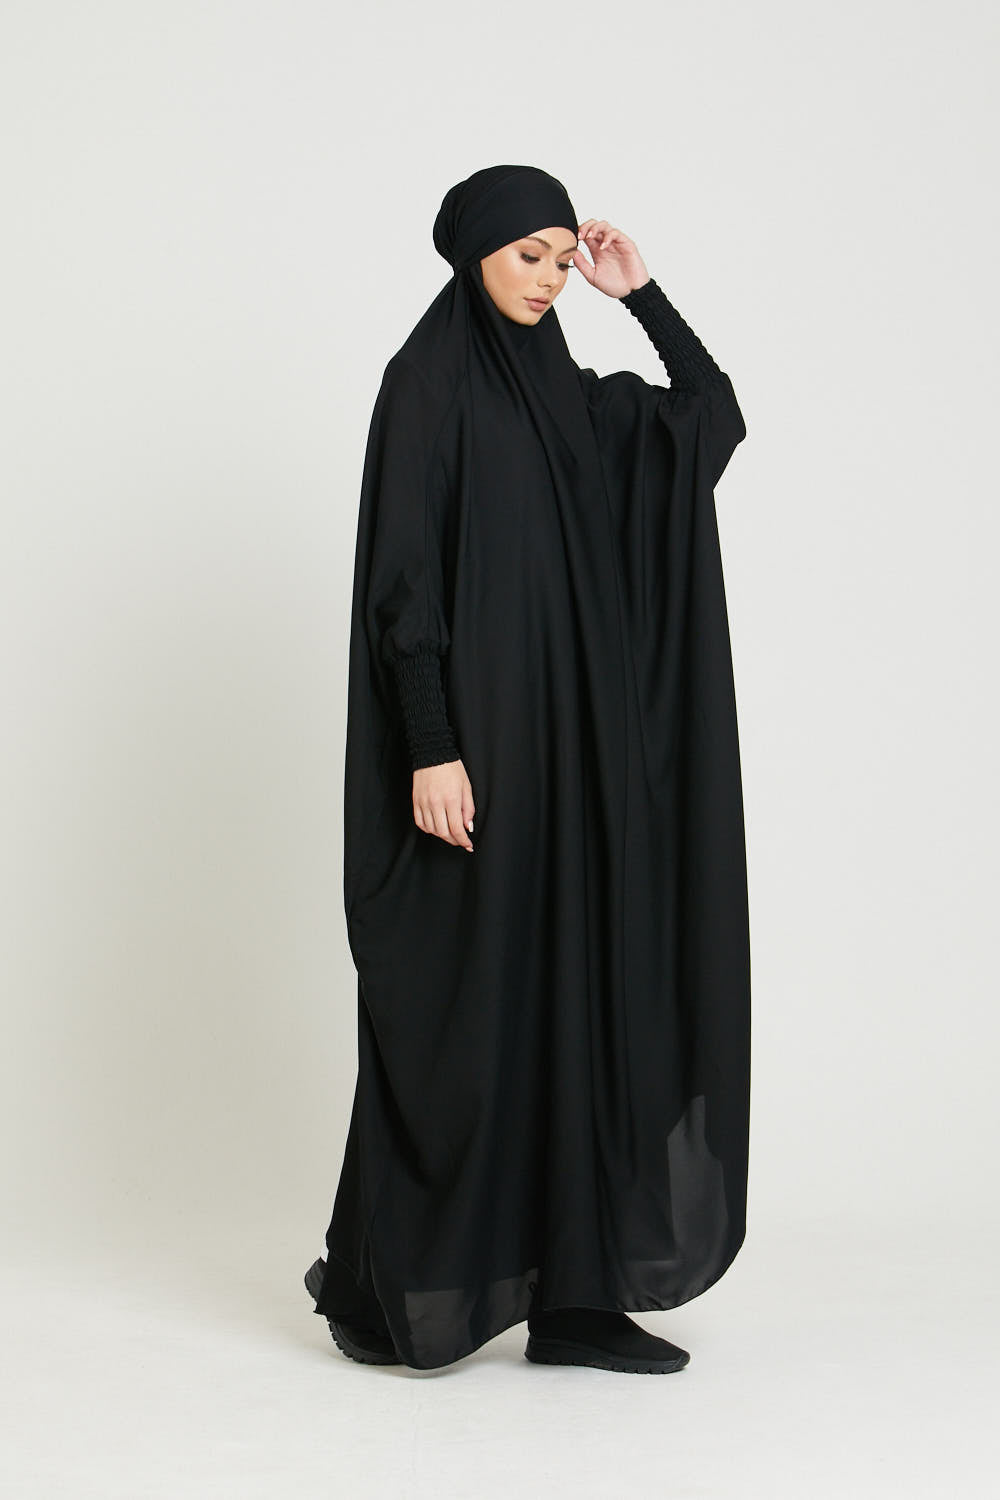 One-Piece Full-Length Jilbab/ Prayer Abaya In Black